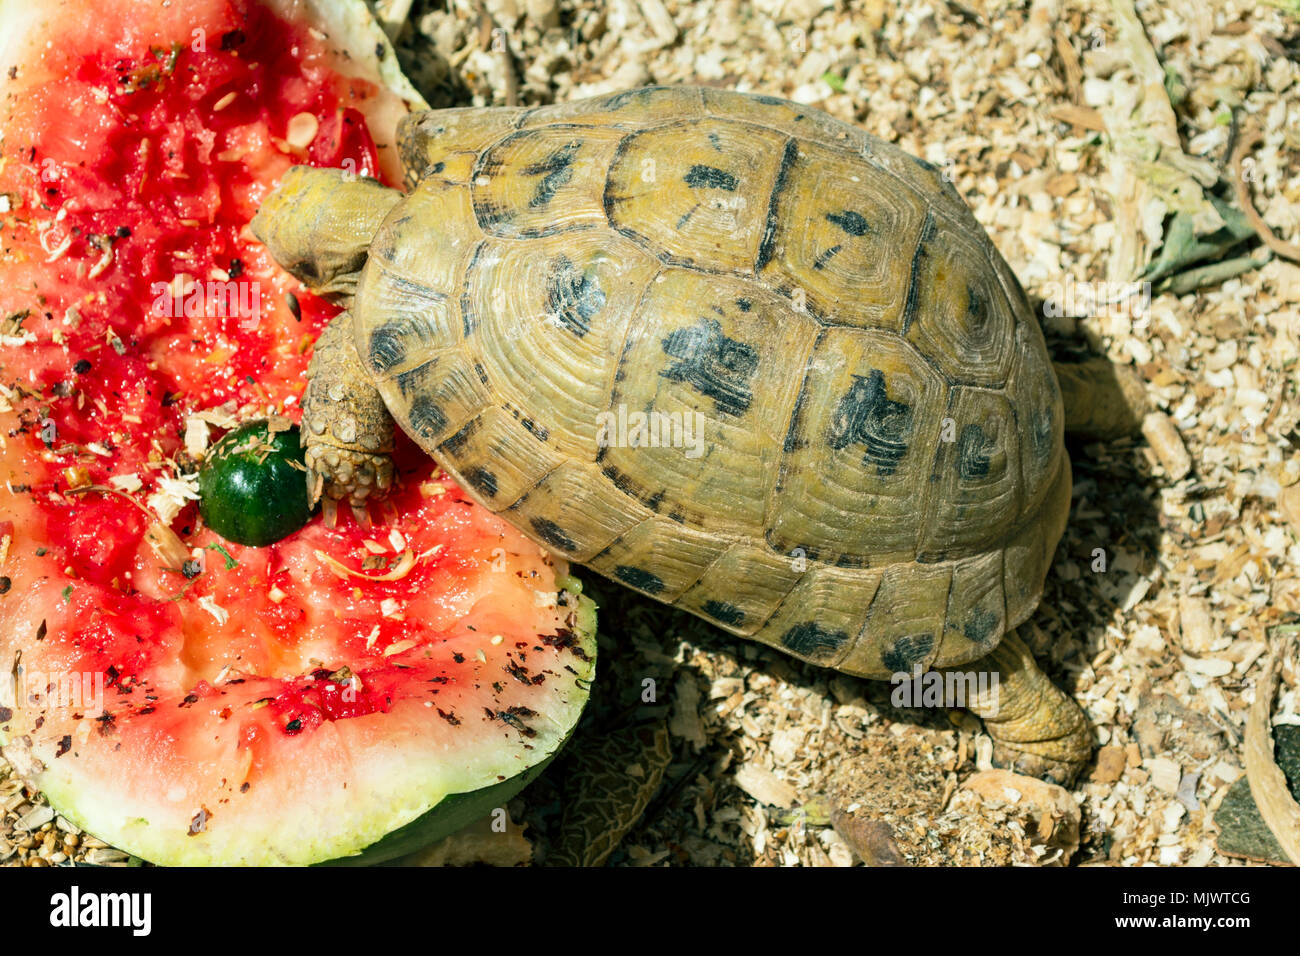 a common tortoise eating watermelon in a terrarium Stock Photo